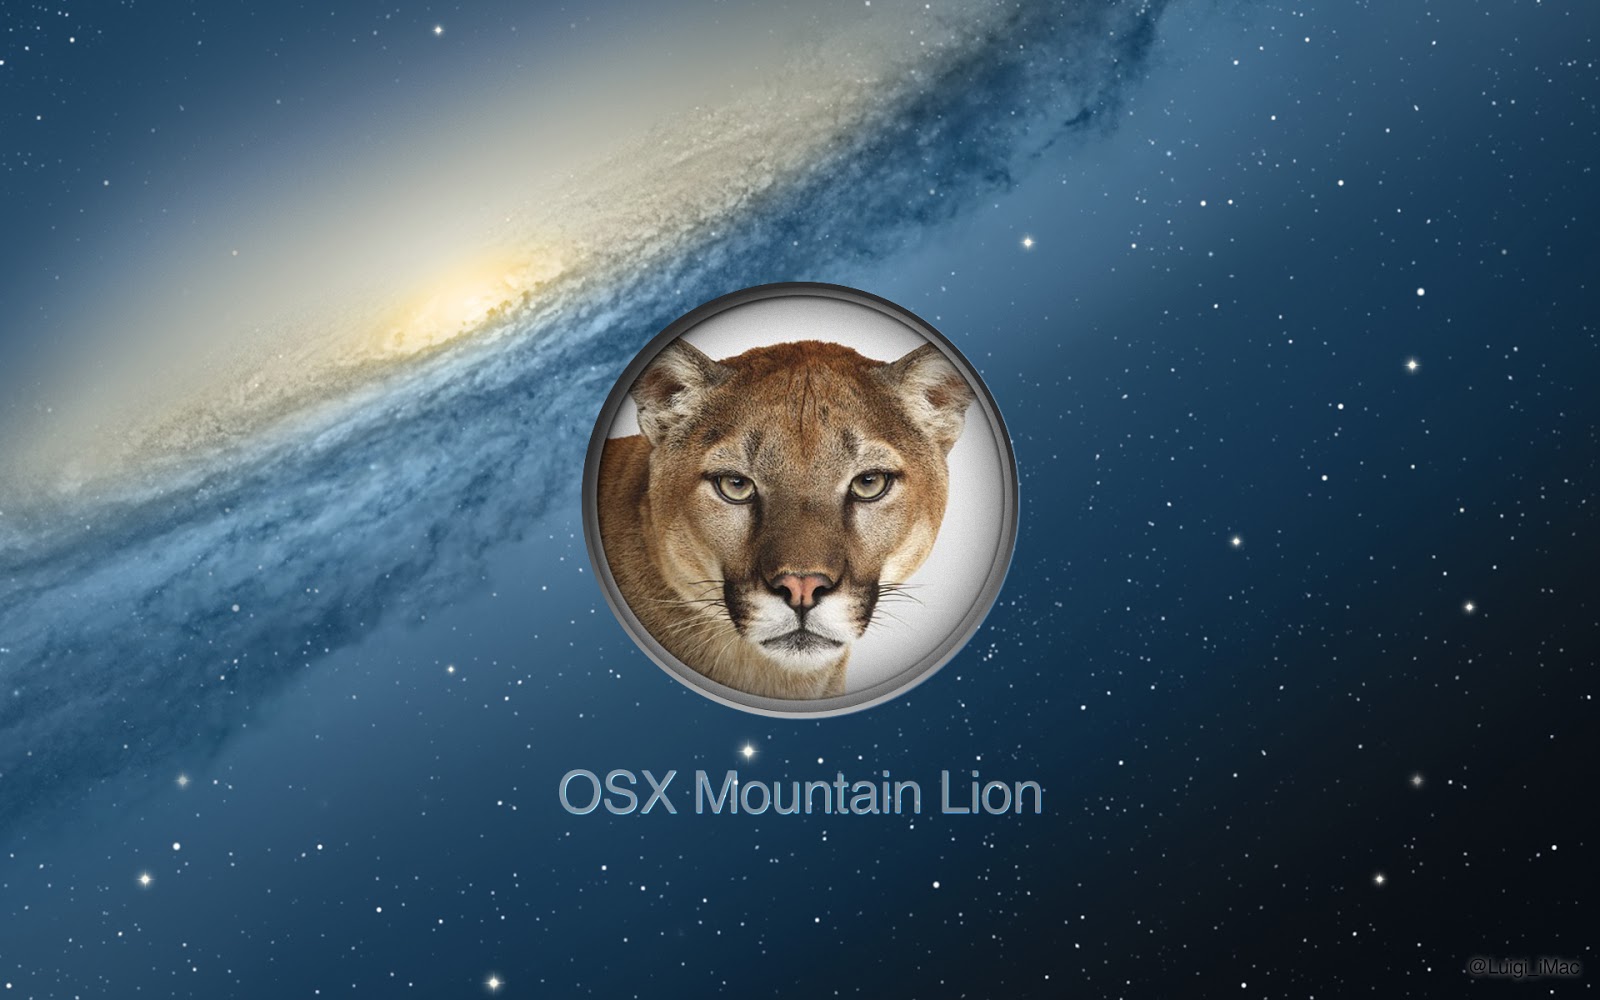 Mac os x mountain lion download